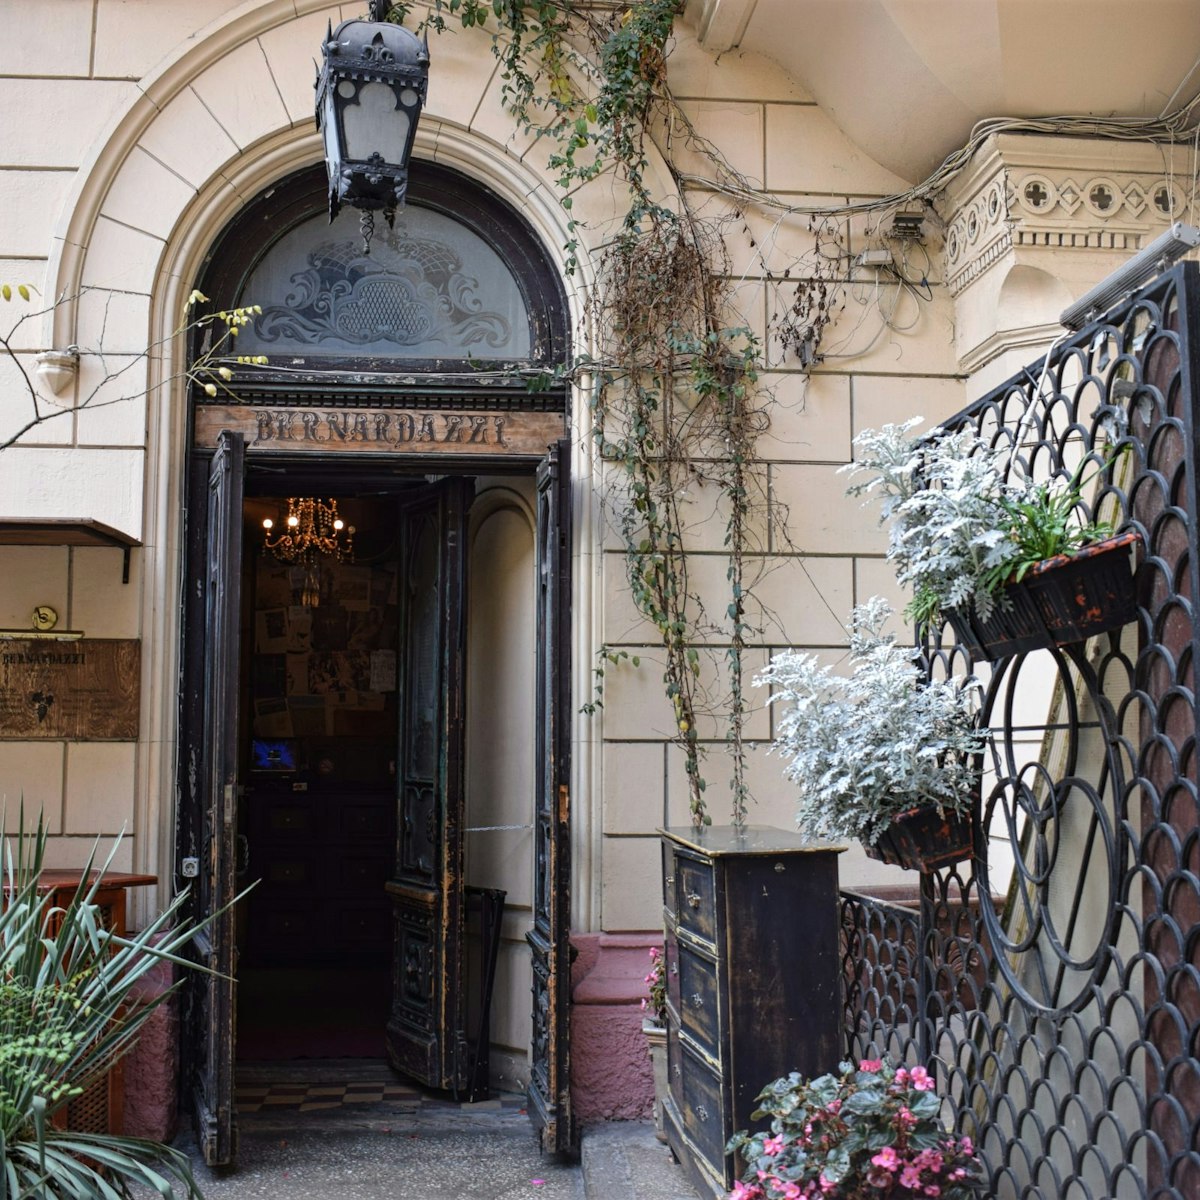 The entrance to Bernardazzi restaurant in Odesa